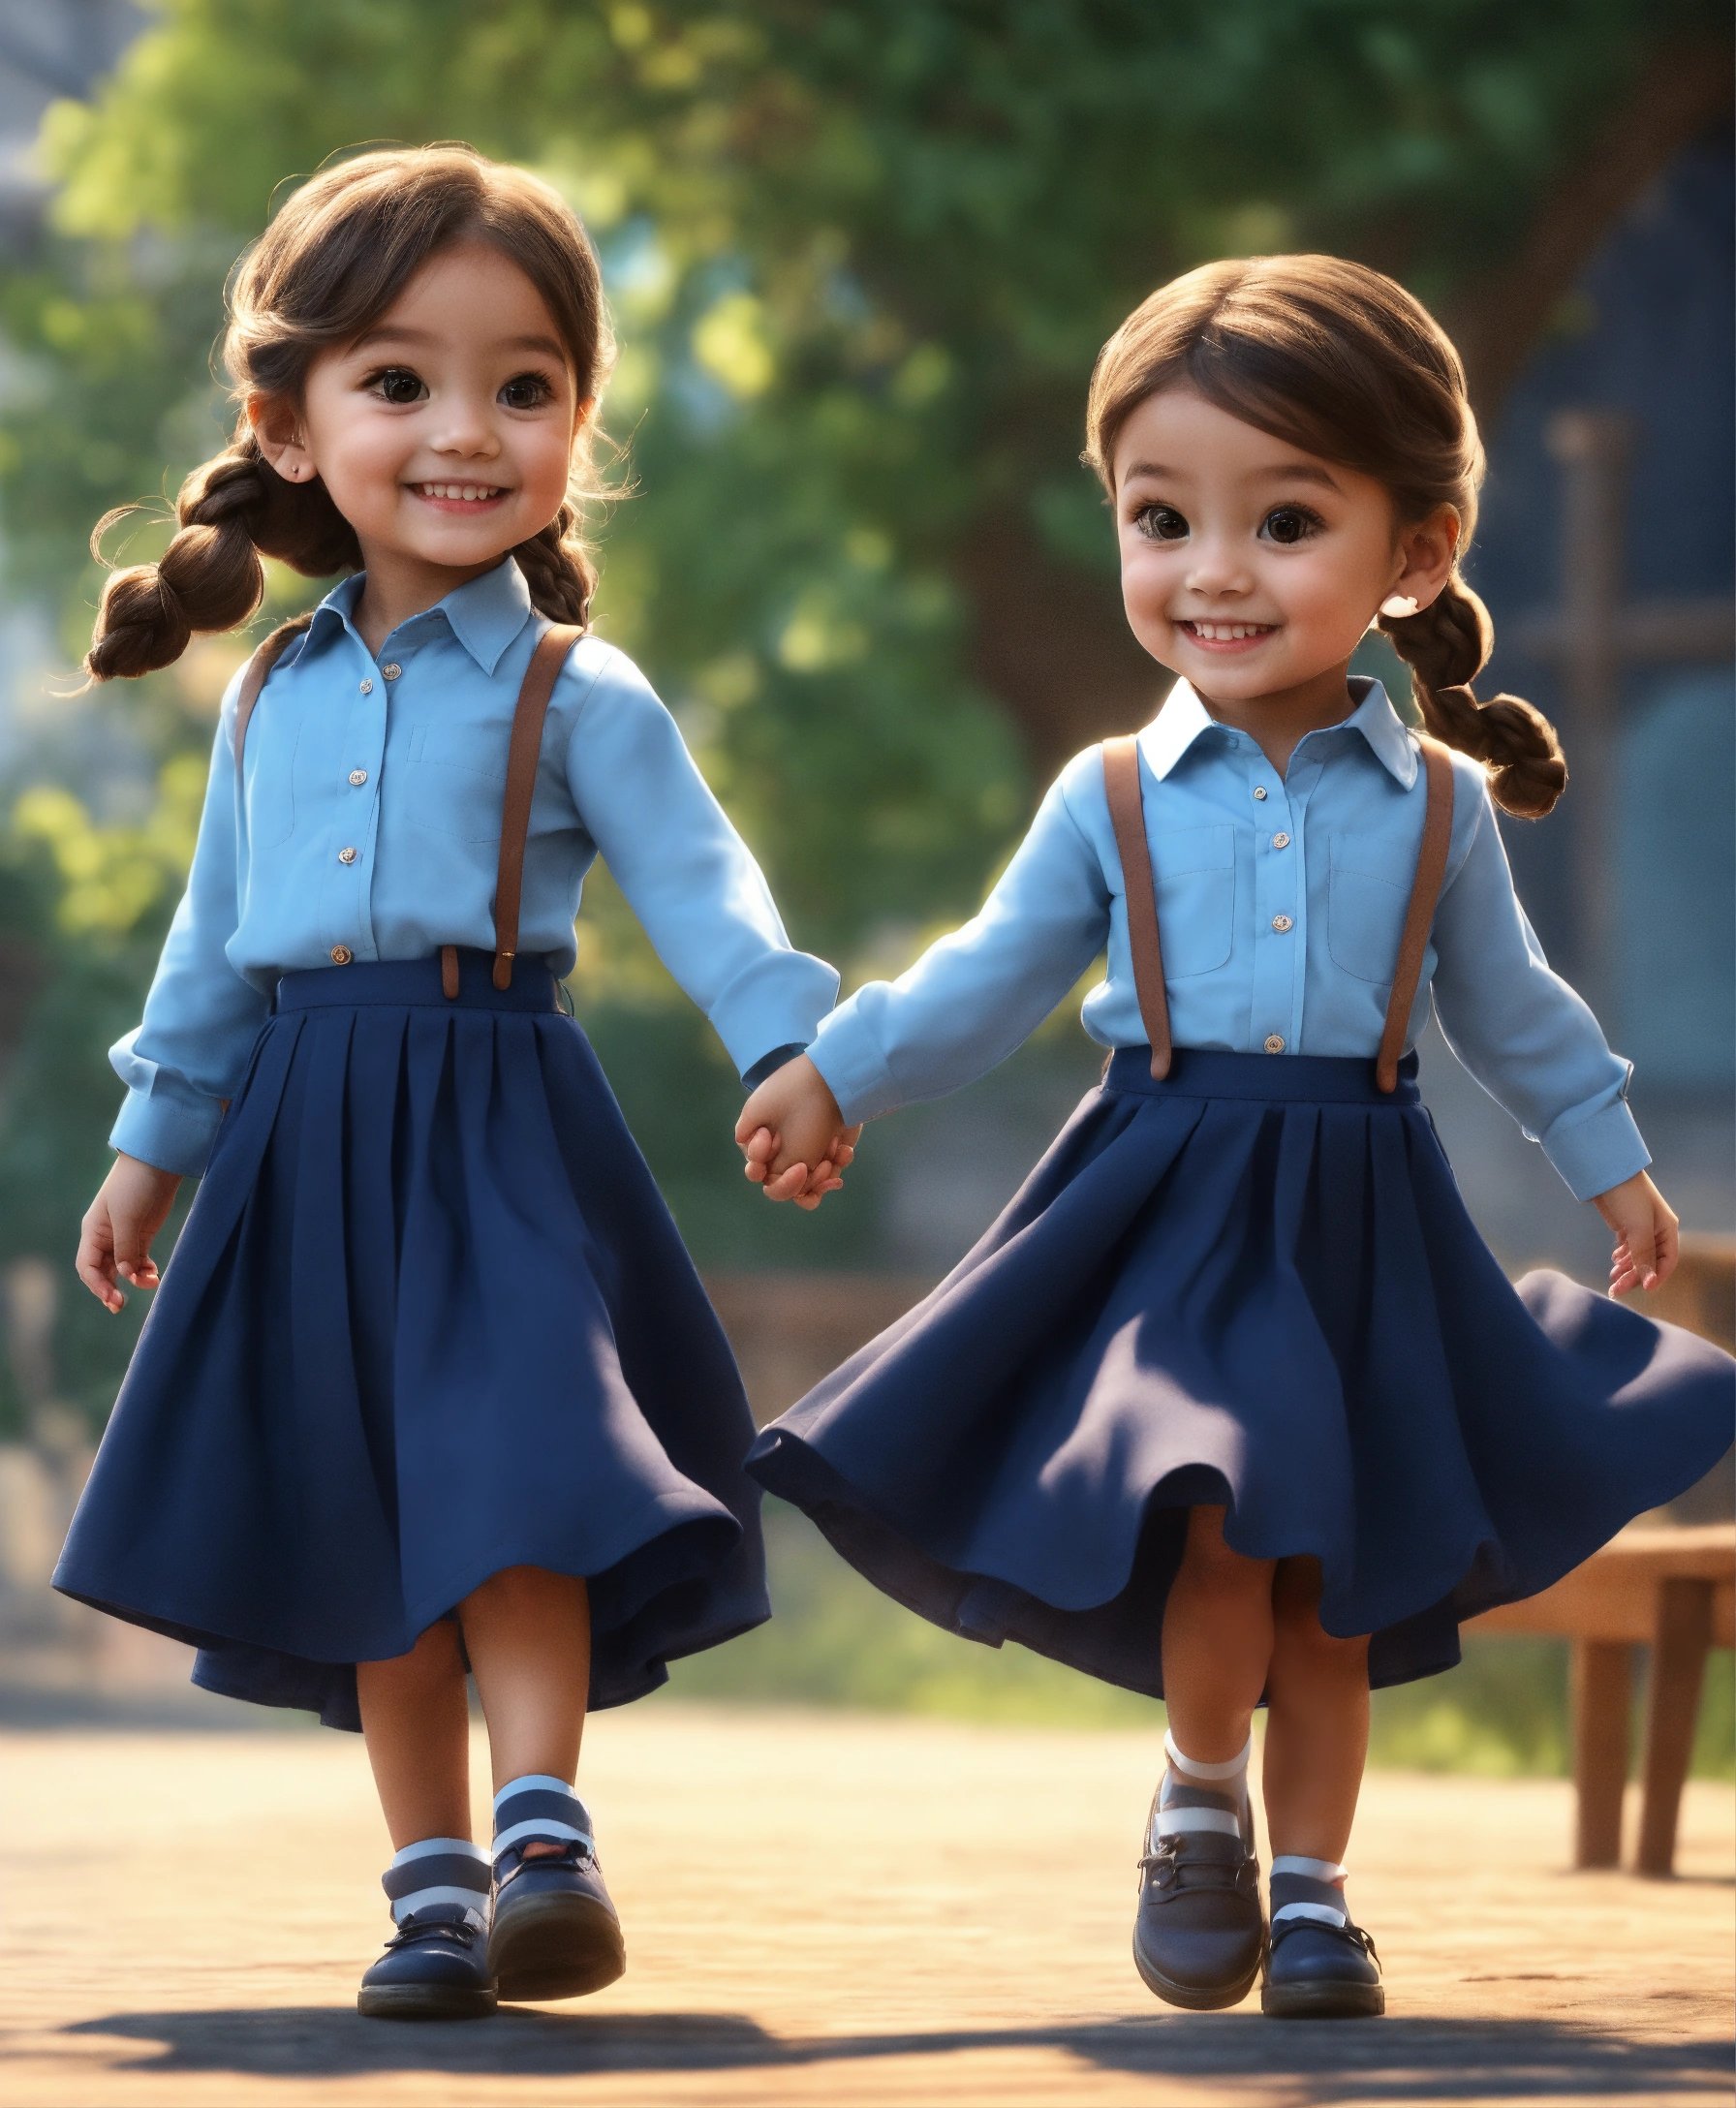 Two cute 5-year-old girls.jpg